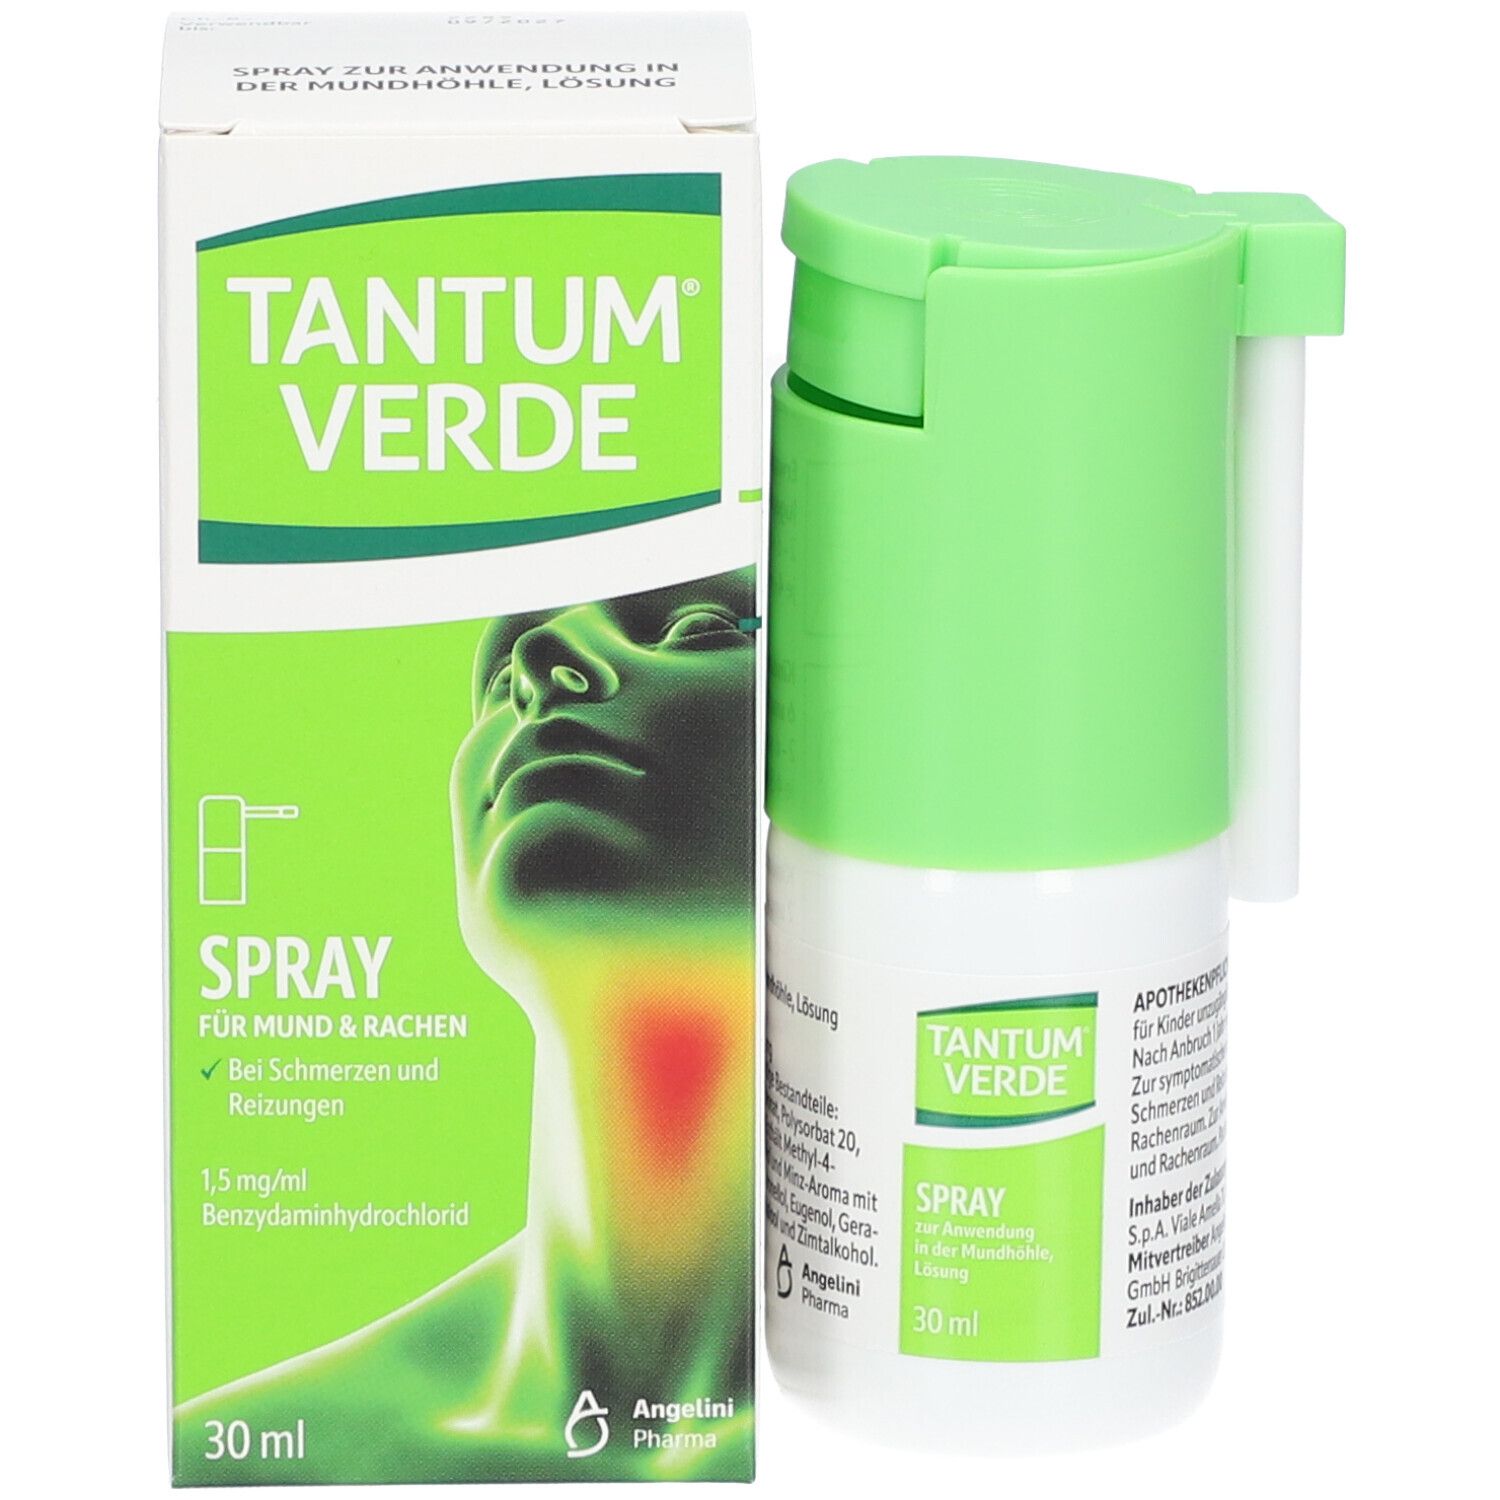 TANTUM VERDE® Spray